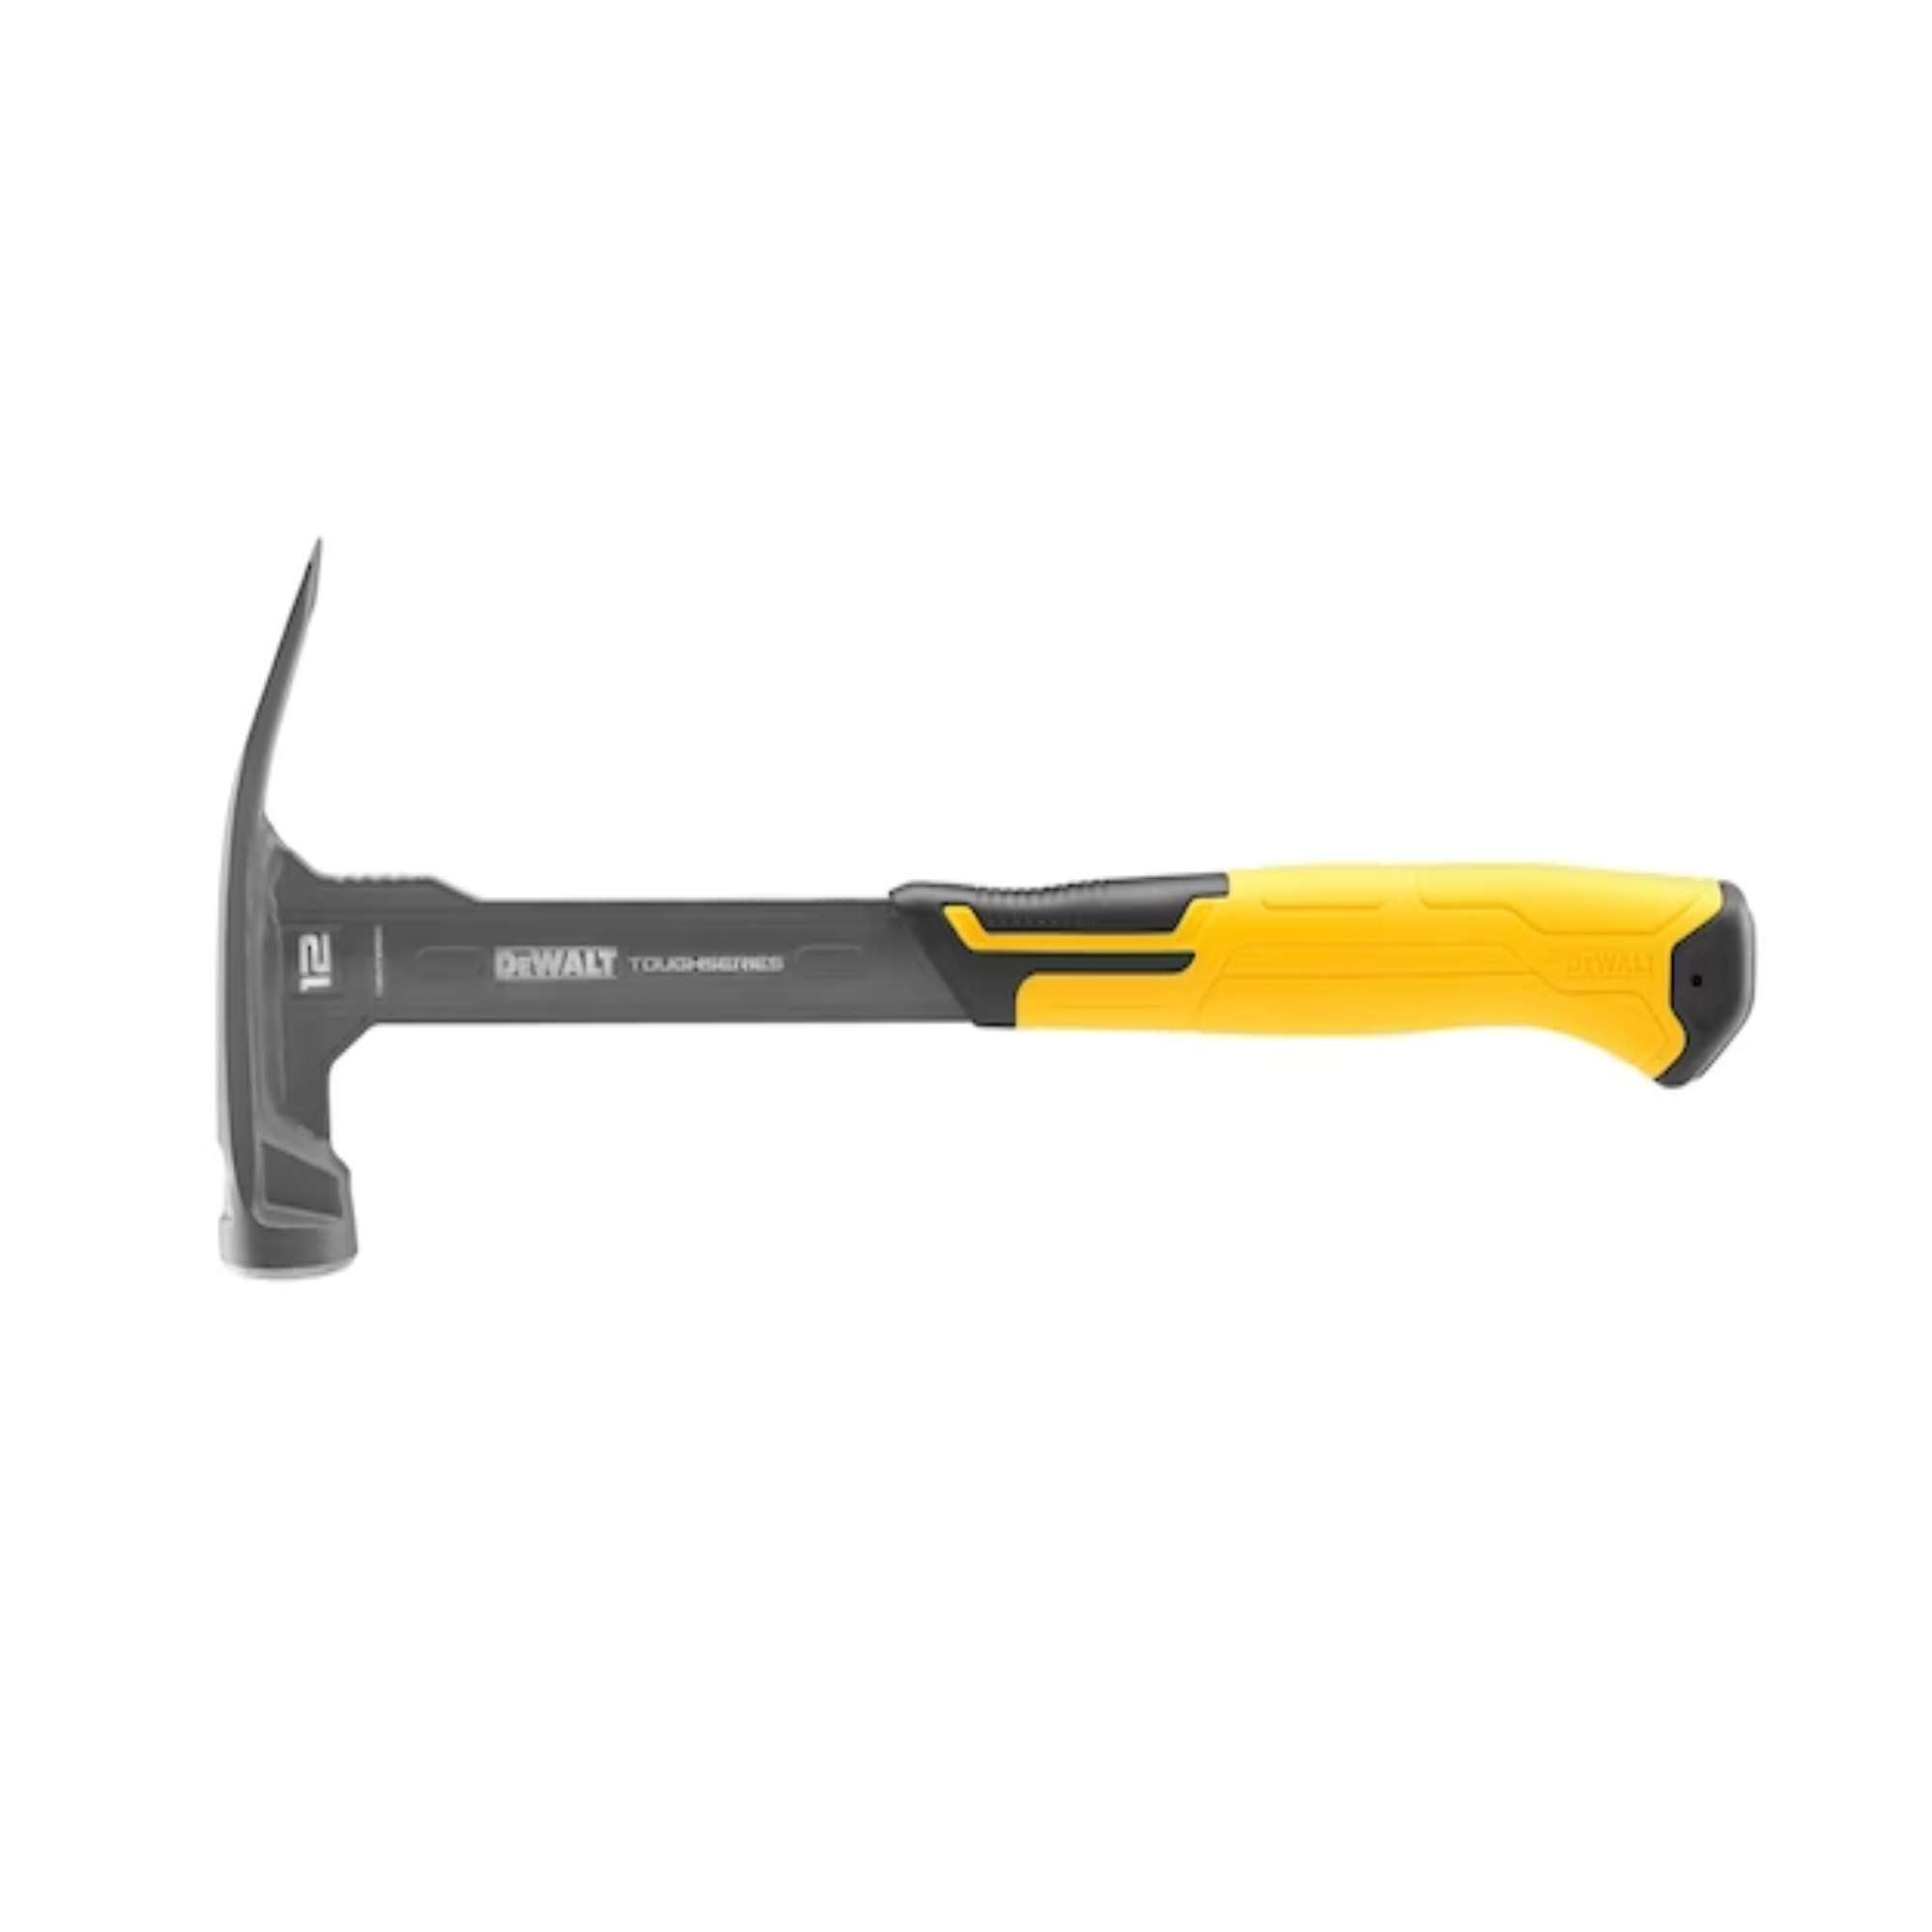 567g steel hammer with smooth head - Dewalt DWHT51004-0